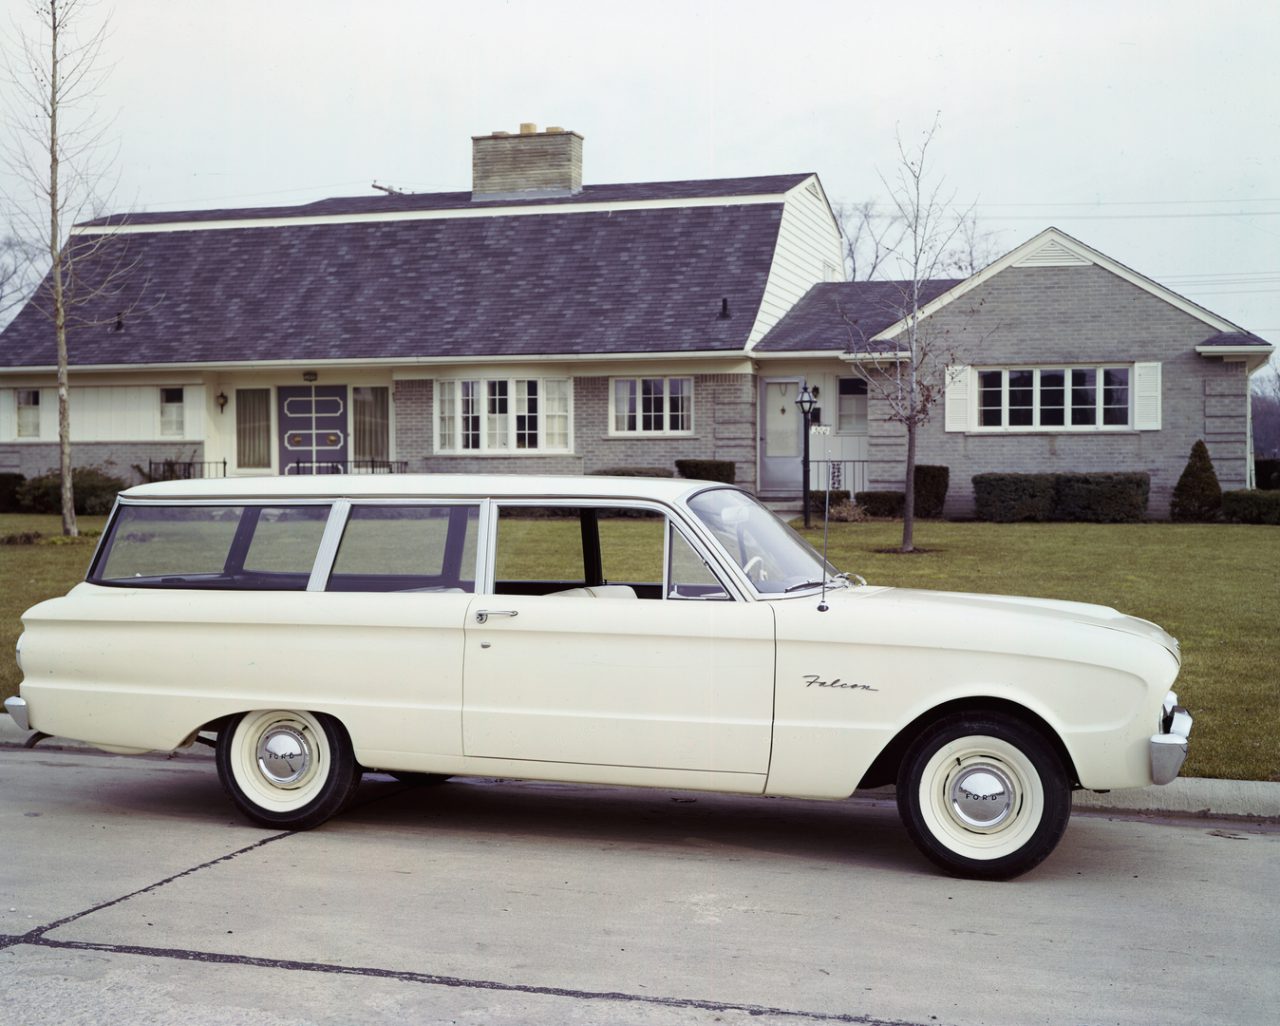 1960 Ford Falcon station wagon